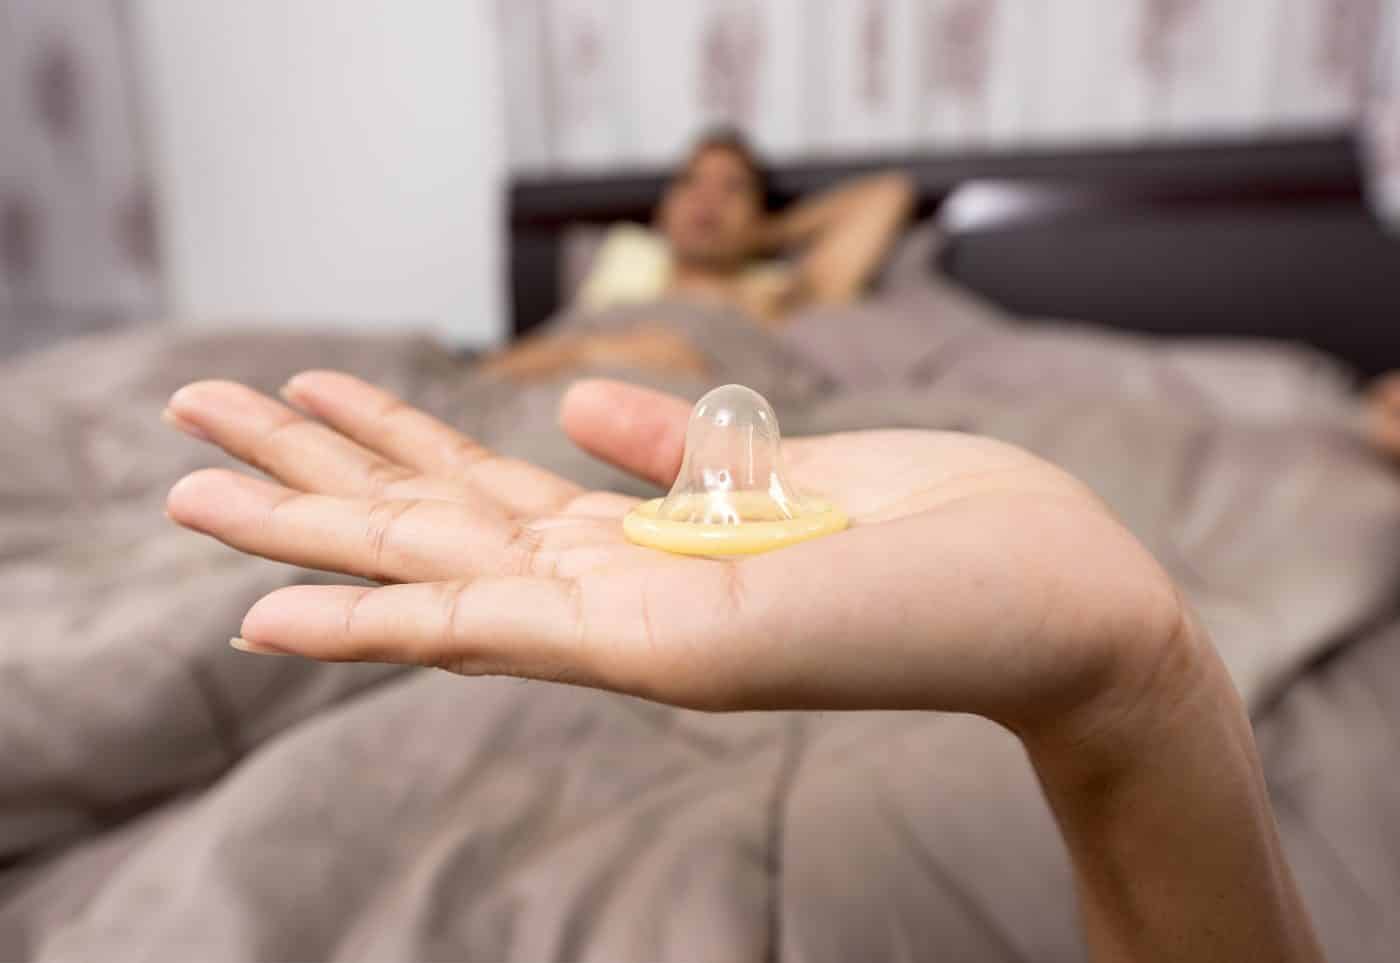 condom-safe-use